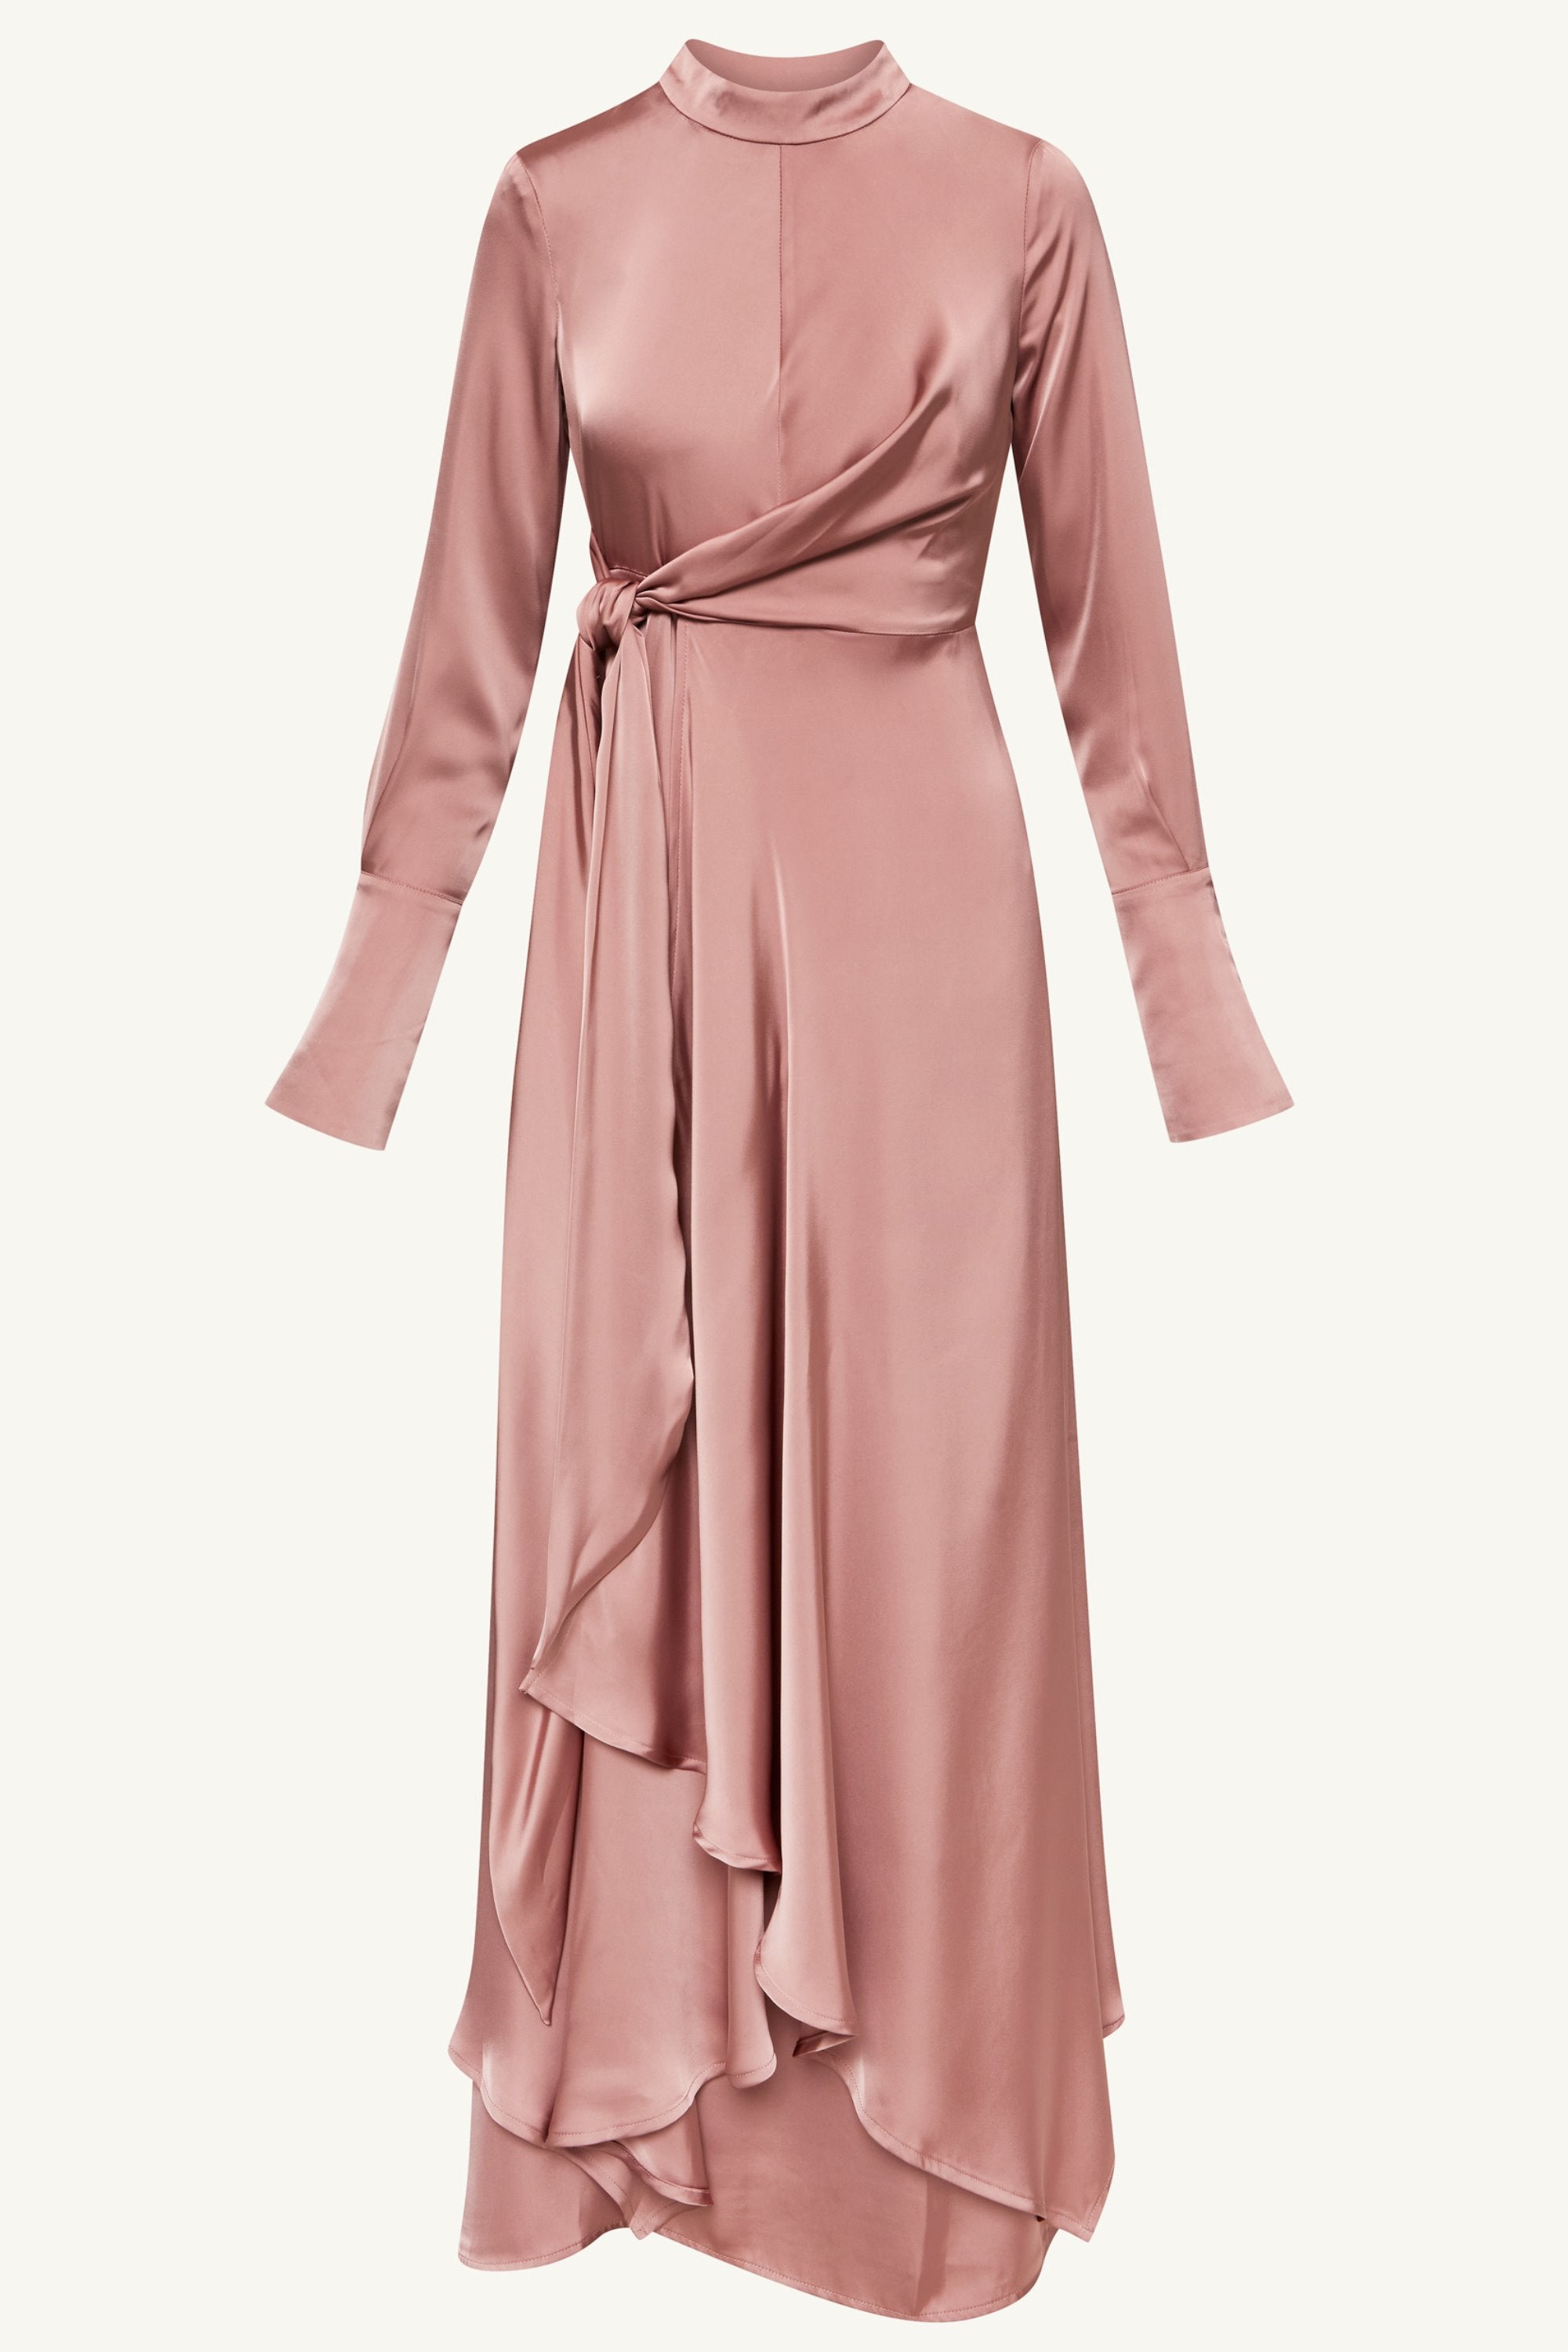 Serena Satin Side Tie Maxi Dress - Dusty Mauve Clothing Veiled 